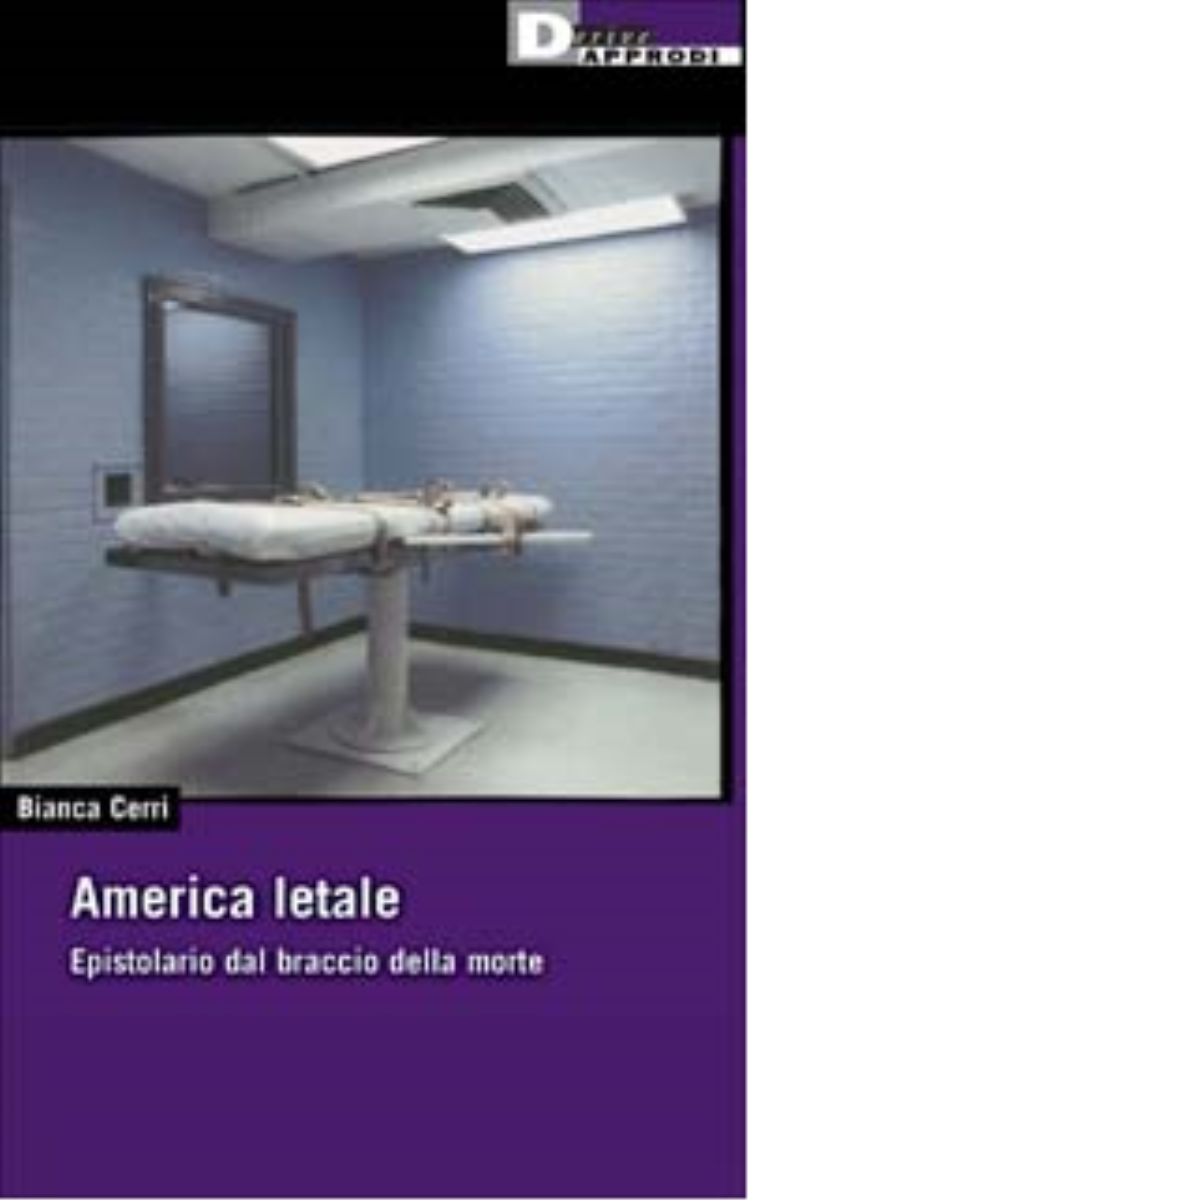 AMERICA LETALE. di BIANCA CERRI - DeriveApprodi editore, 2002